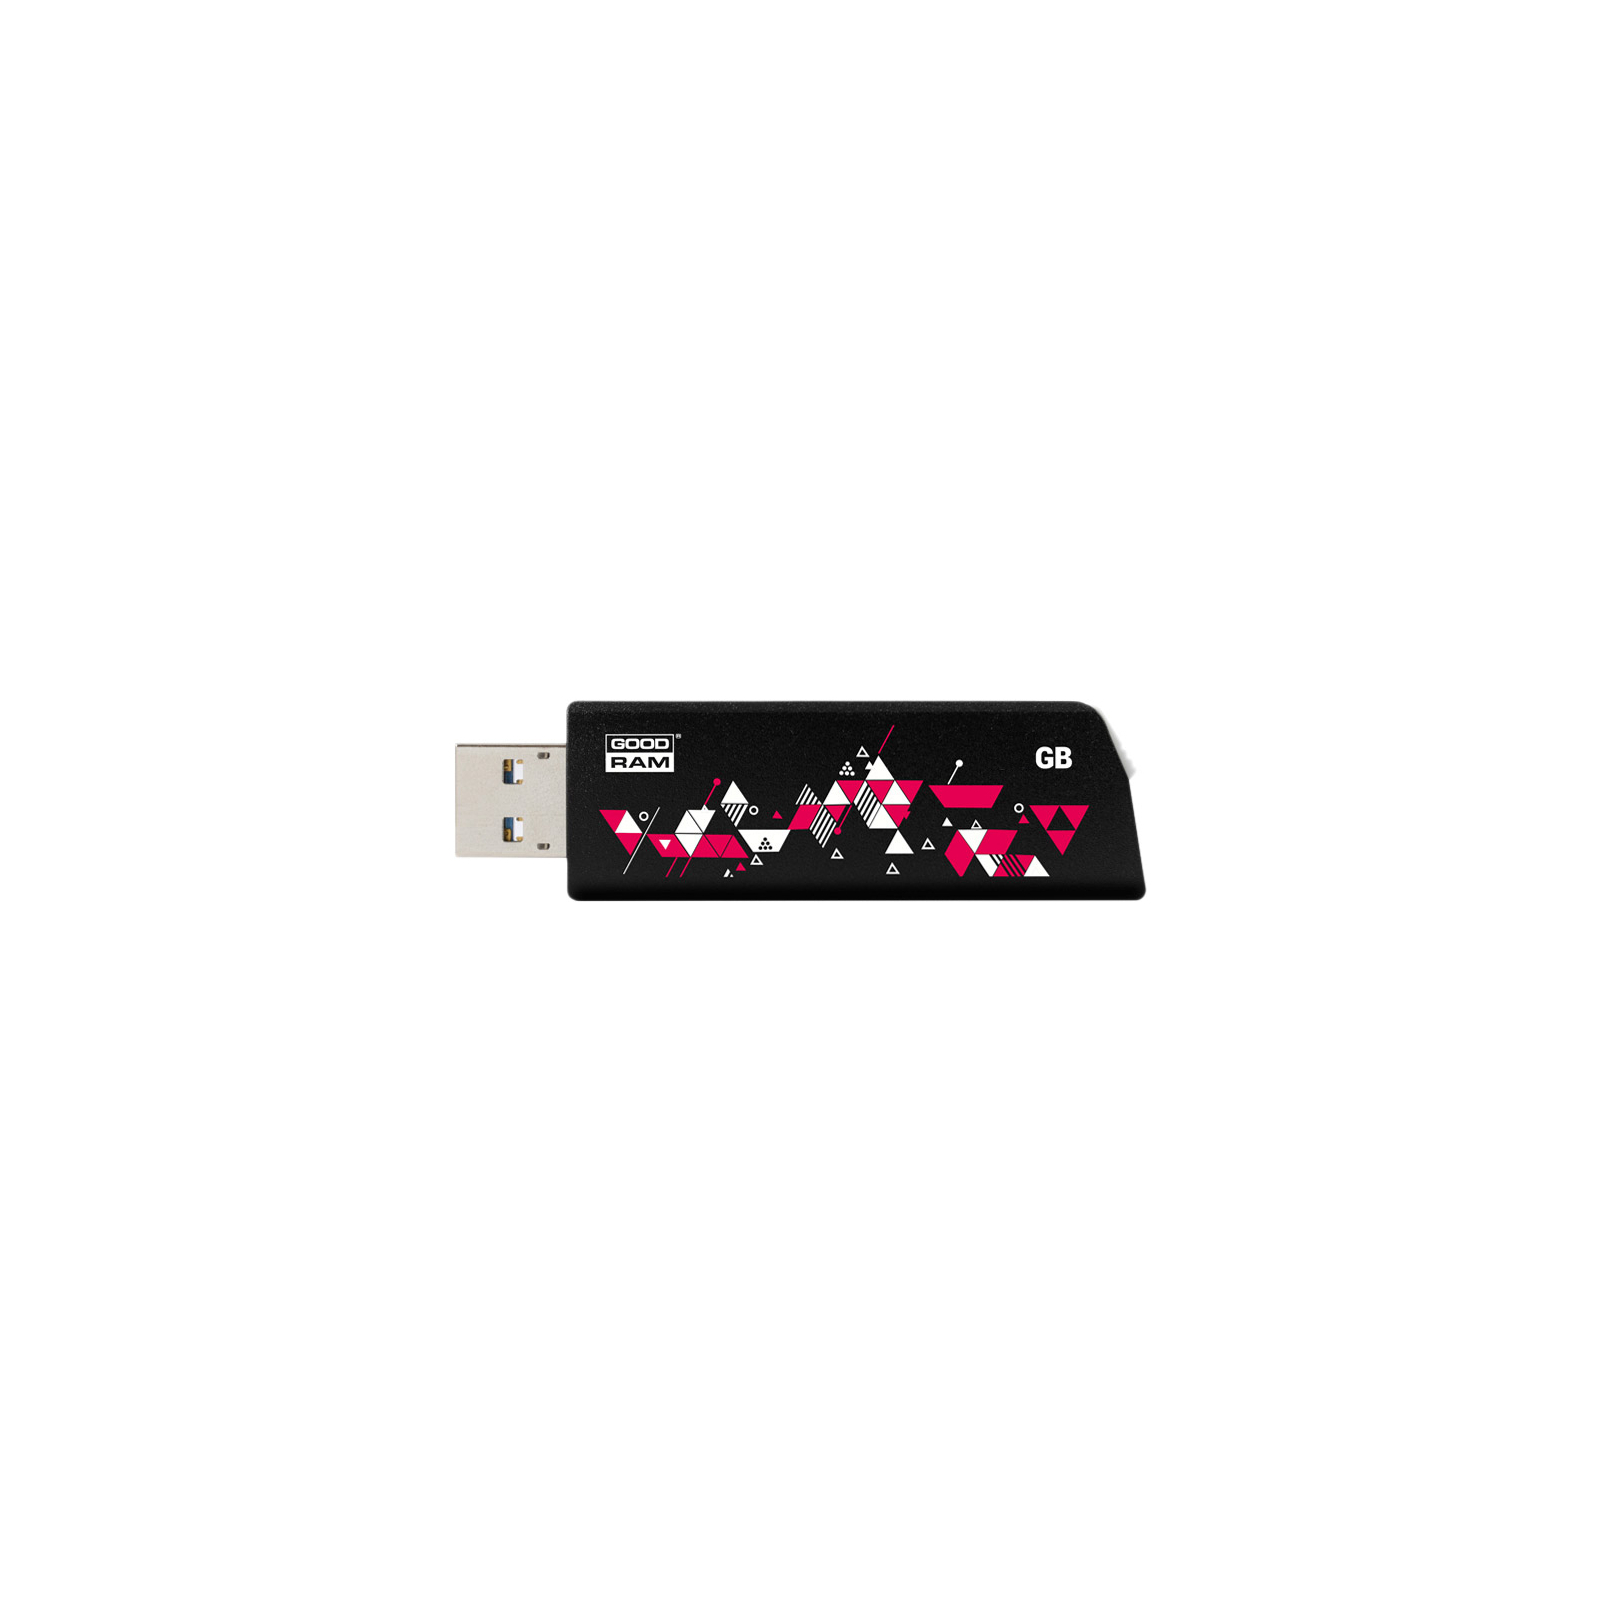 USB флеш накопитель Goodram 128GB UCL3 Click Black USB 3.0 (UCL3-1280K0R11) изображение 2